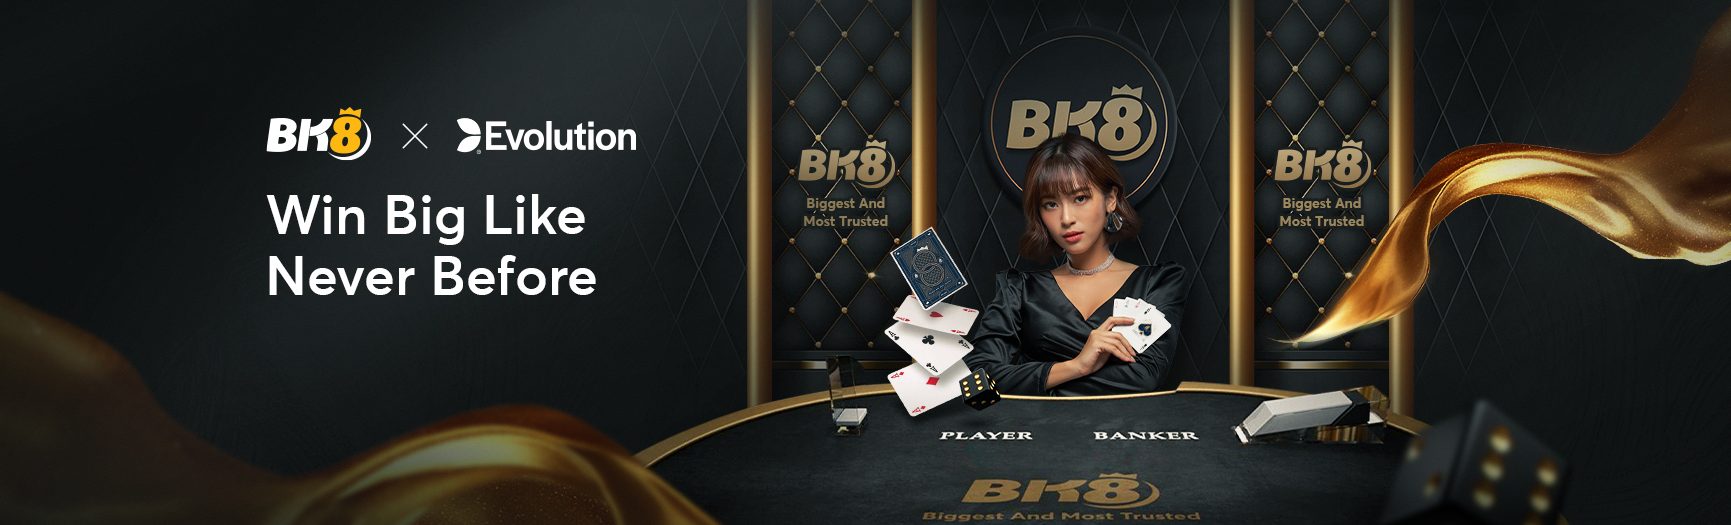 BK8-x-Evolution-Gaming-Win-Big